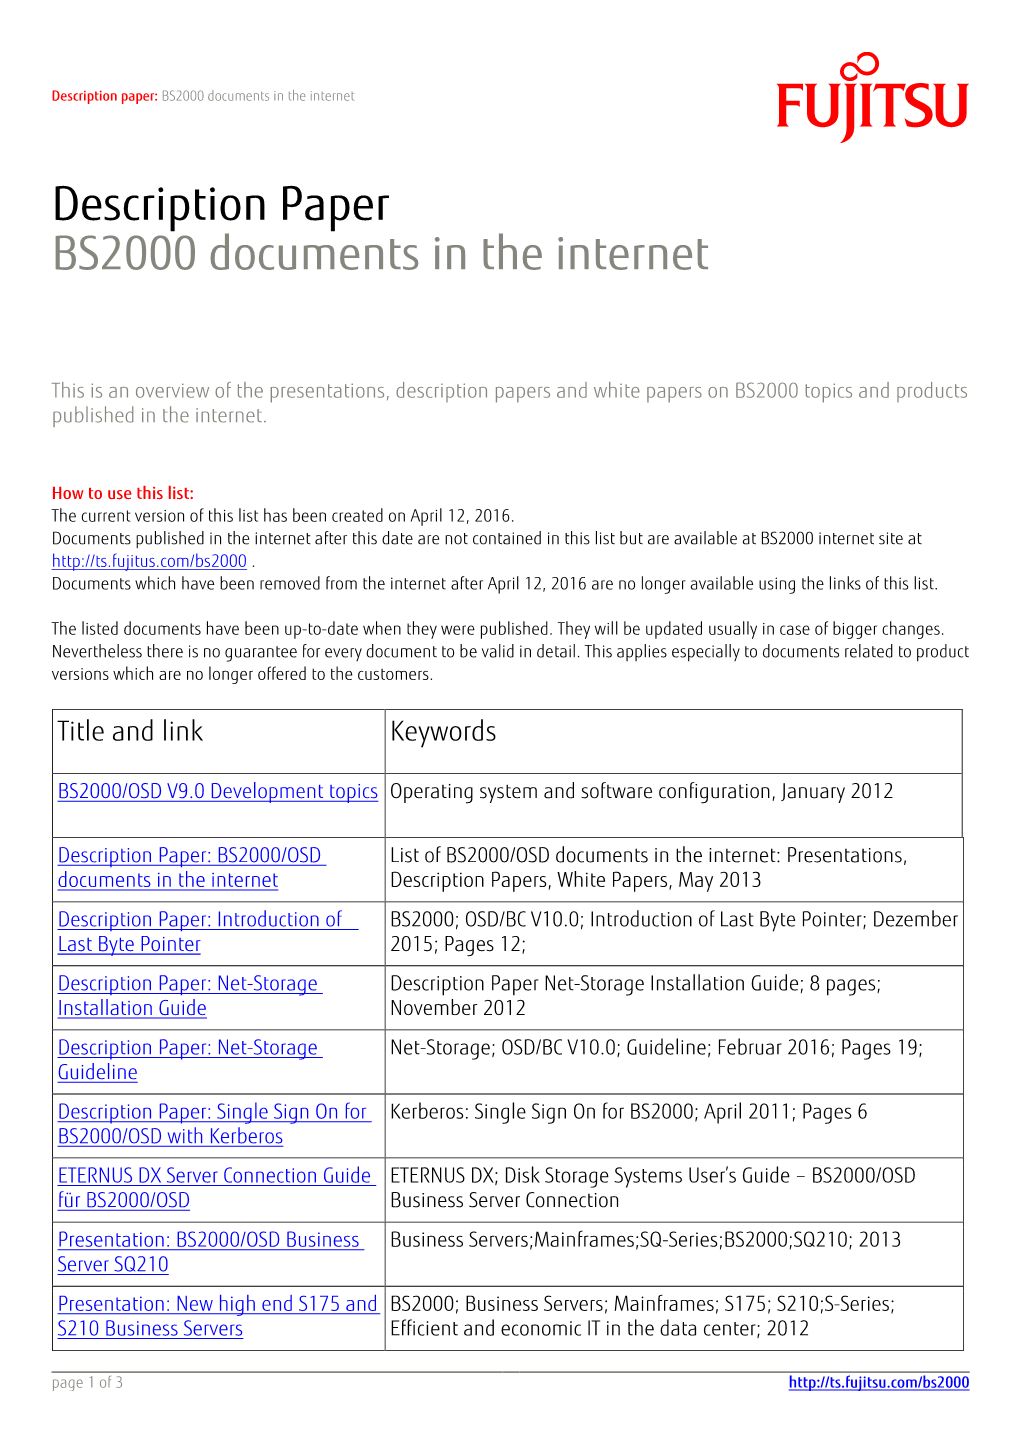 Description Paper BS2000 Documents in the Internet